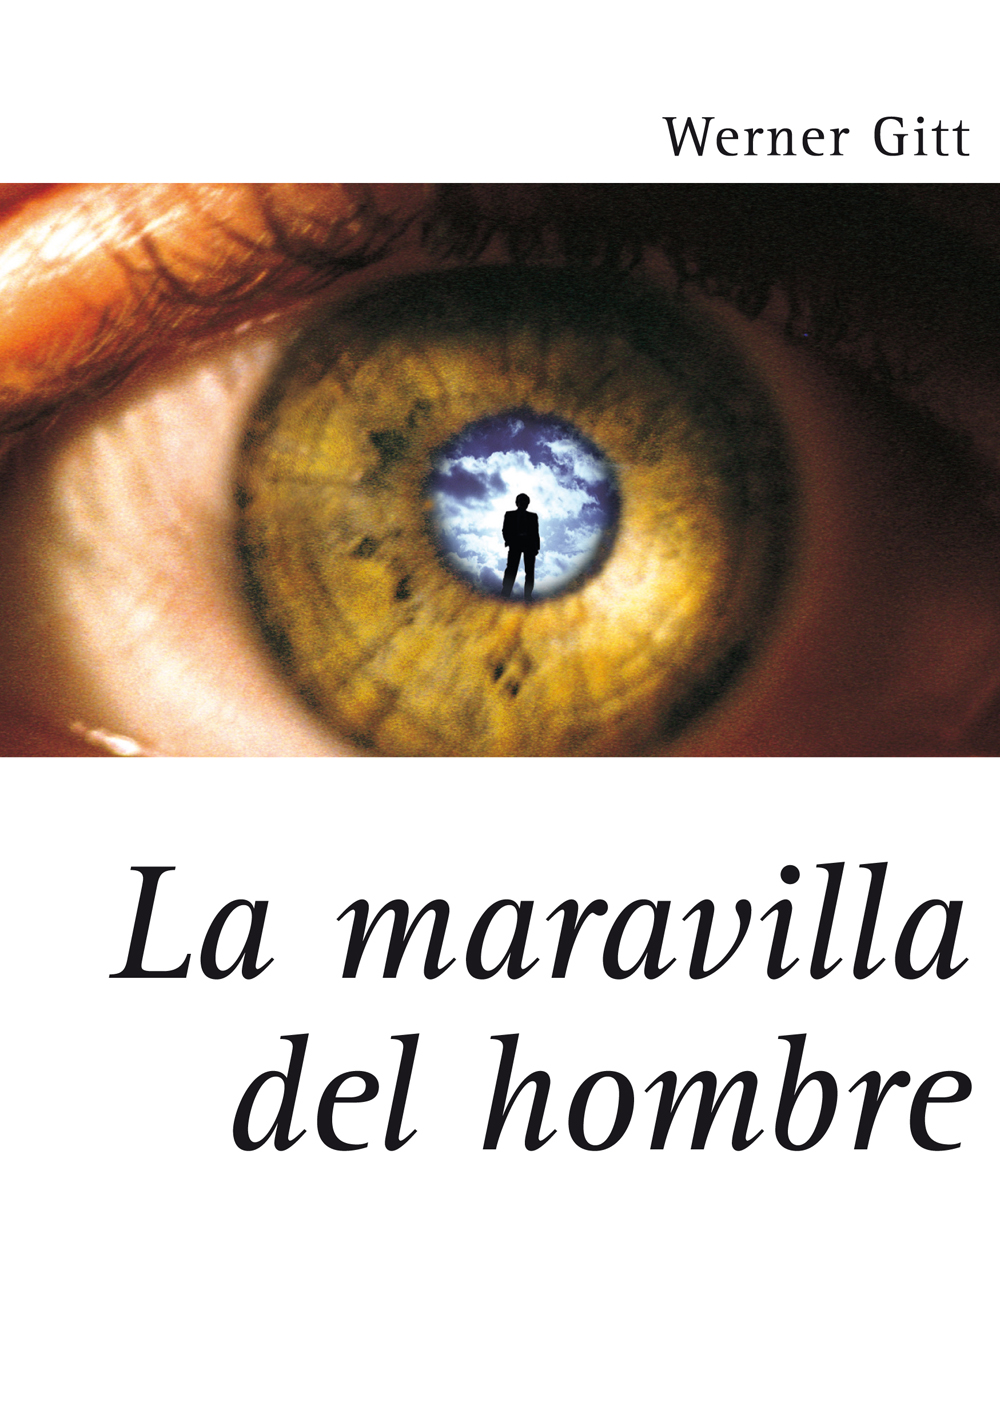 Spanish: The Wonder of Man